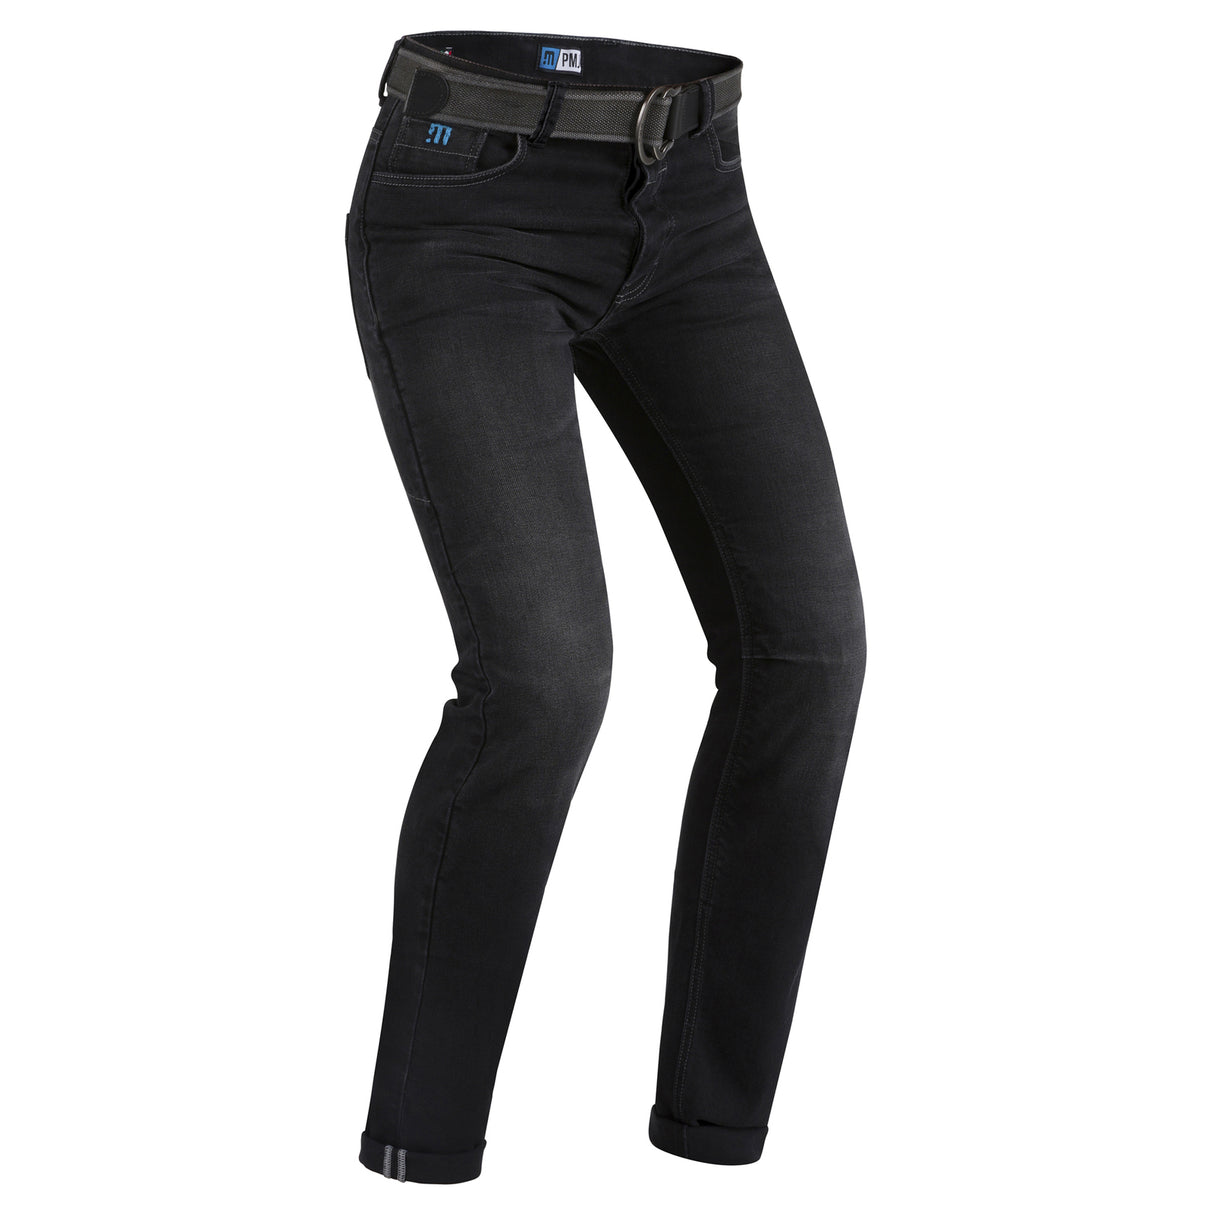 PMJ Caferacer Jeans (With Belt) - Black